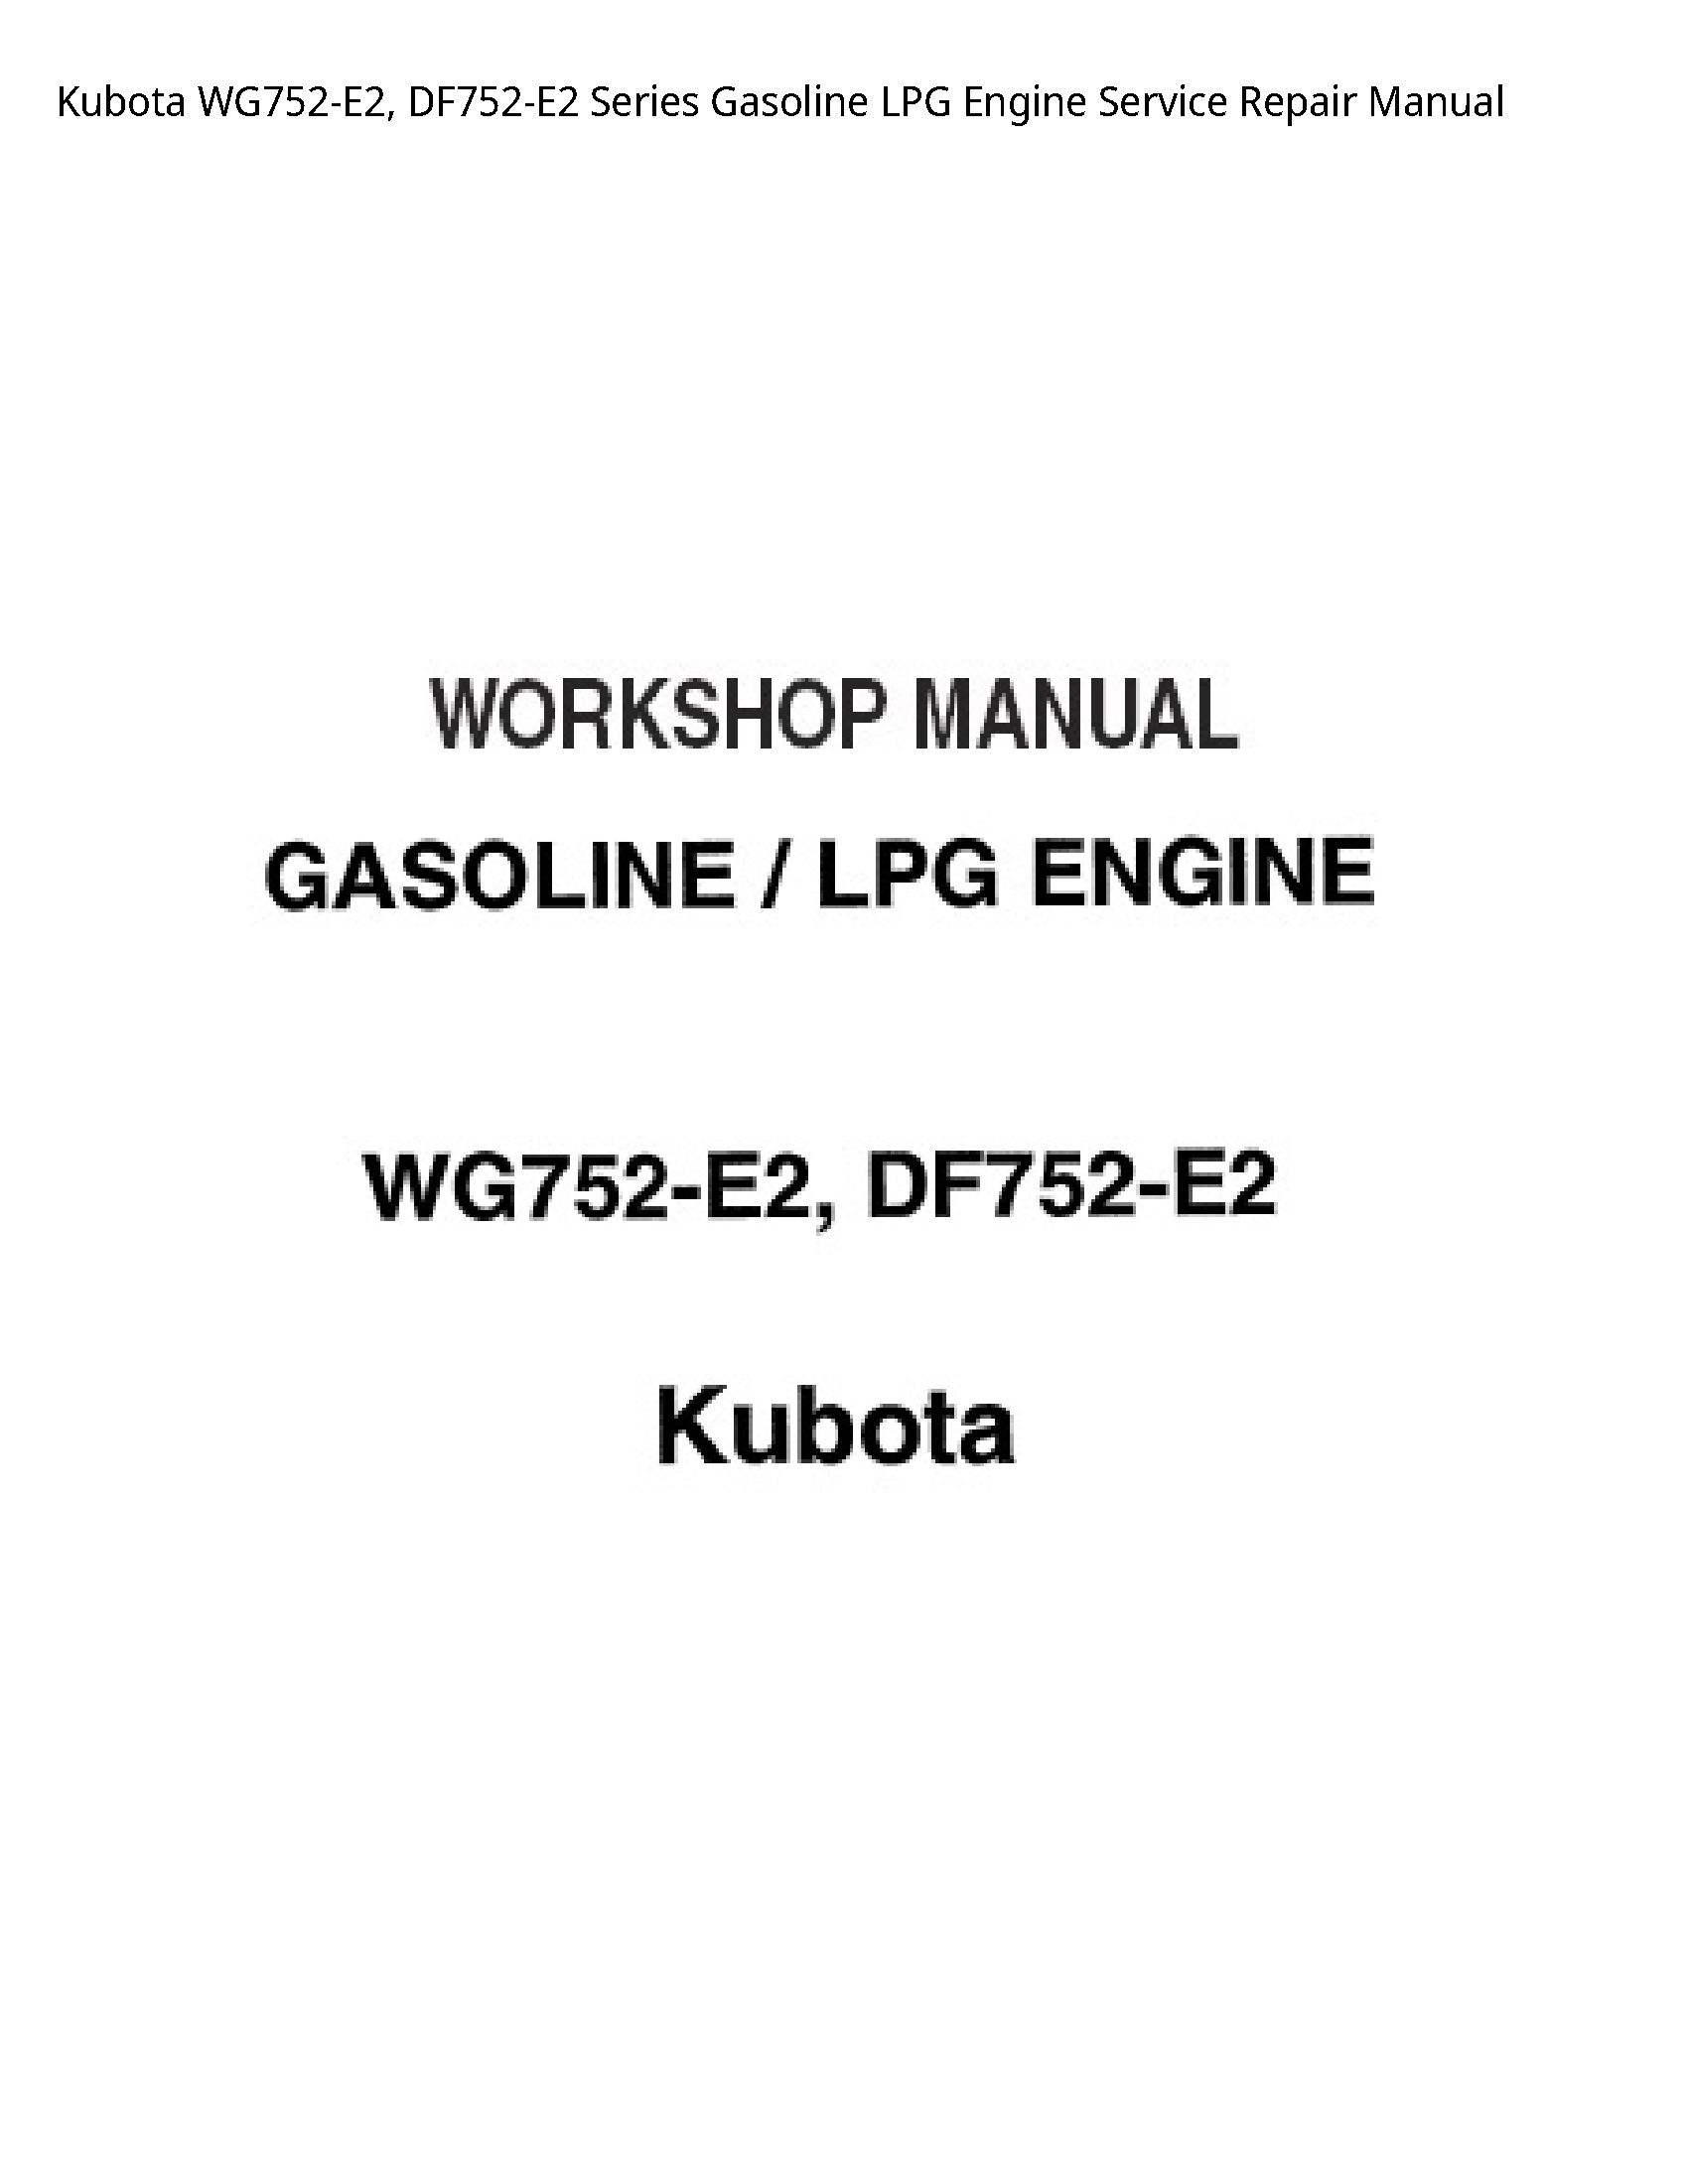 Kubota WG752-E2 Series Gasoline LPG Engine manual